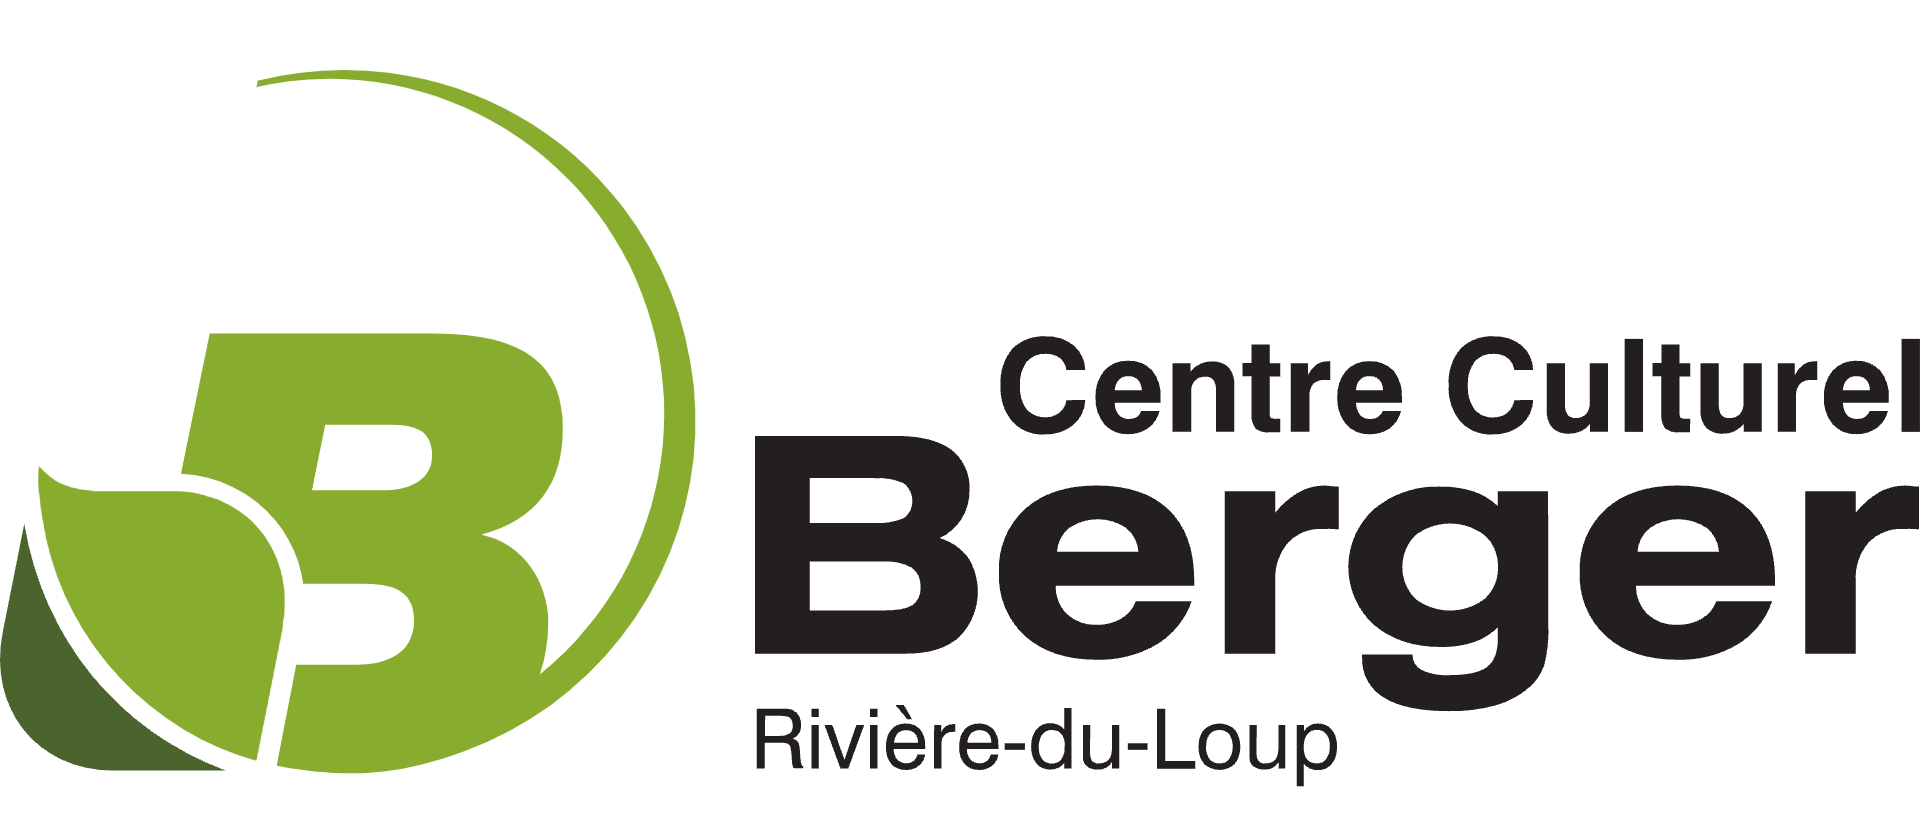 Centre Culturel Berger